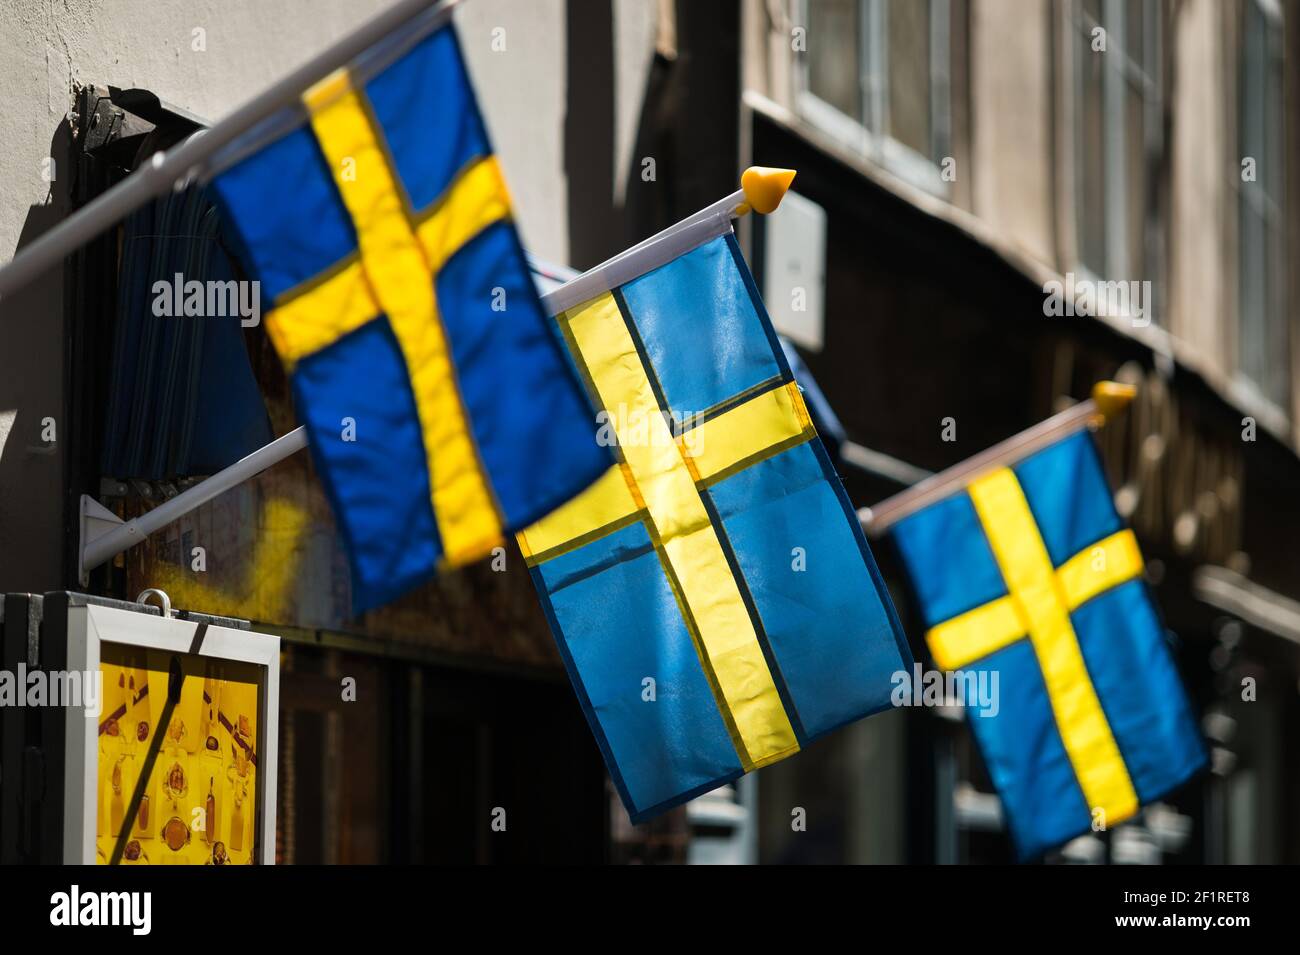 Swedish flags outside a shop on Västerlånggatan, Gamla Stan, Stockholm, Sweden. Stock Photo